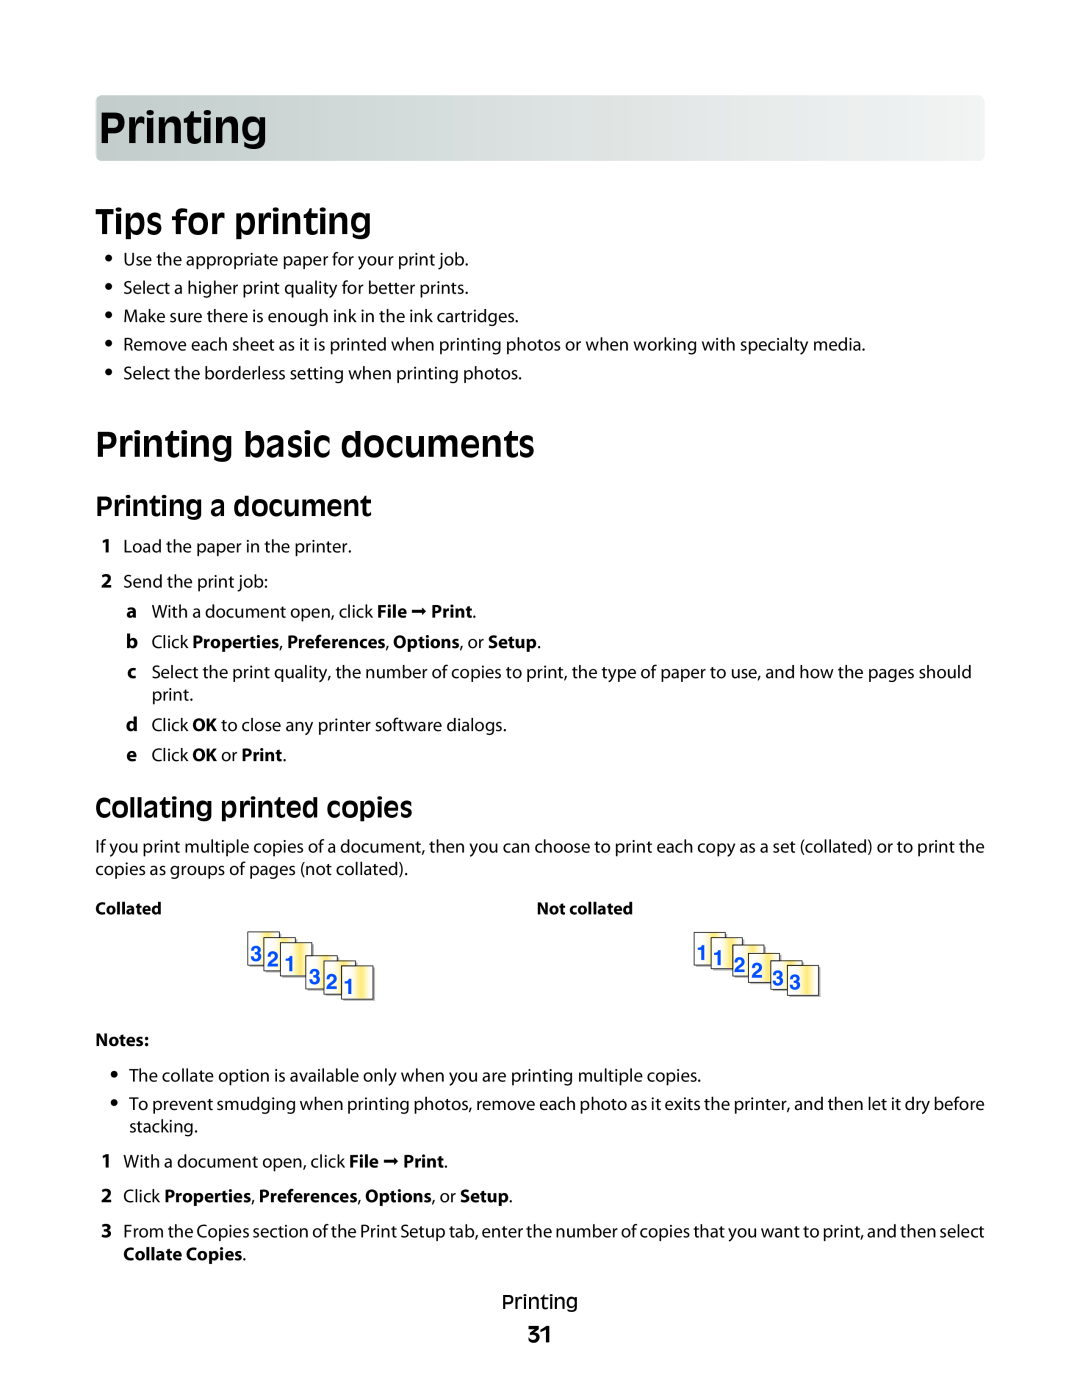 Dell V515W manual Tips for printing, Printing basic documents, Printing a document, Collating printed copies 